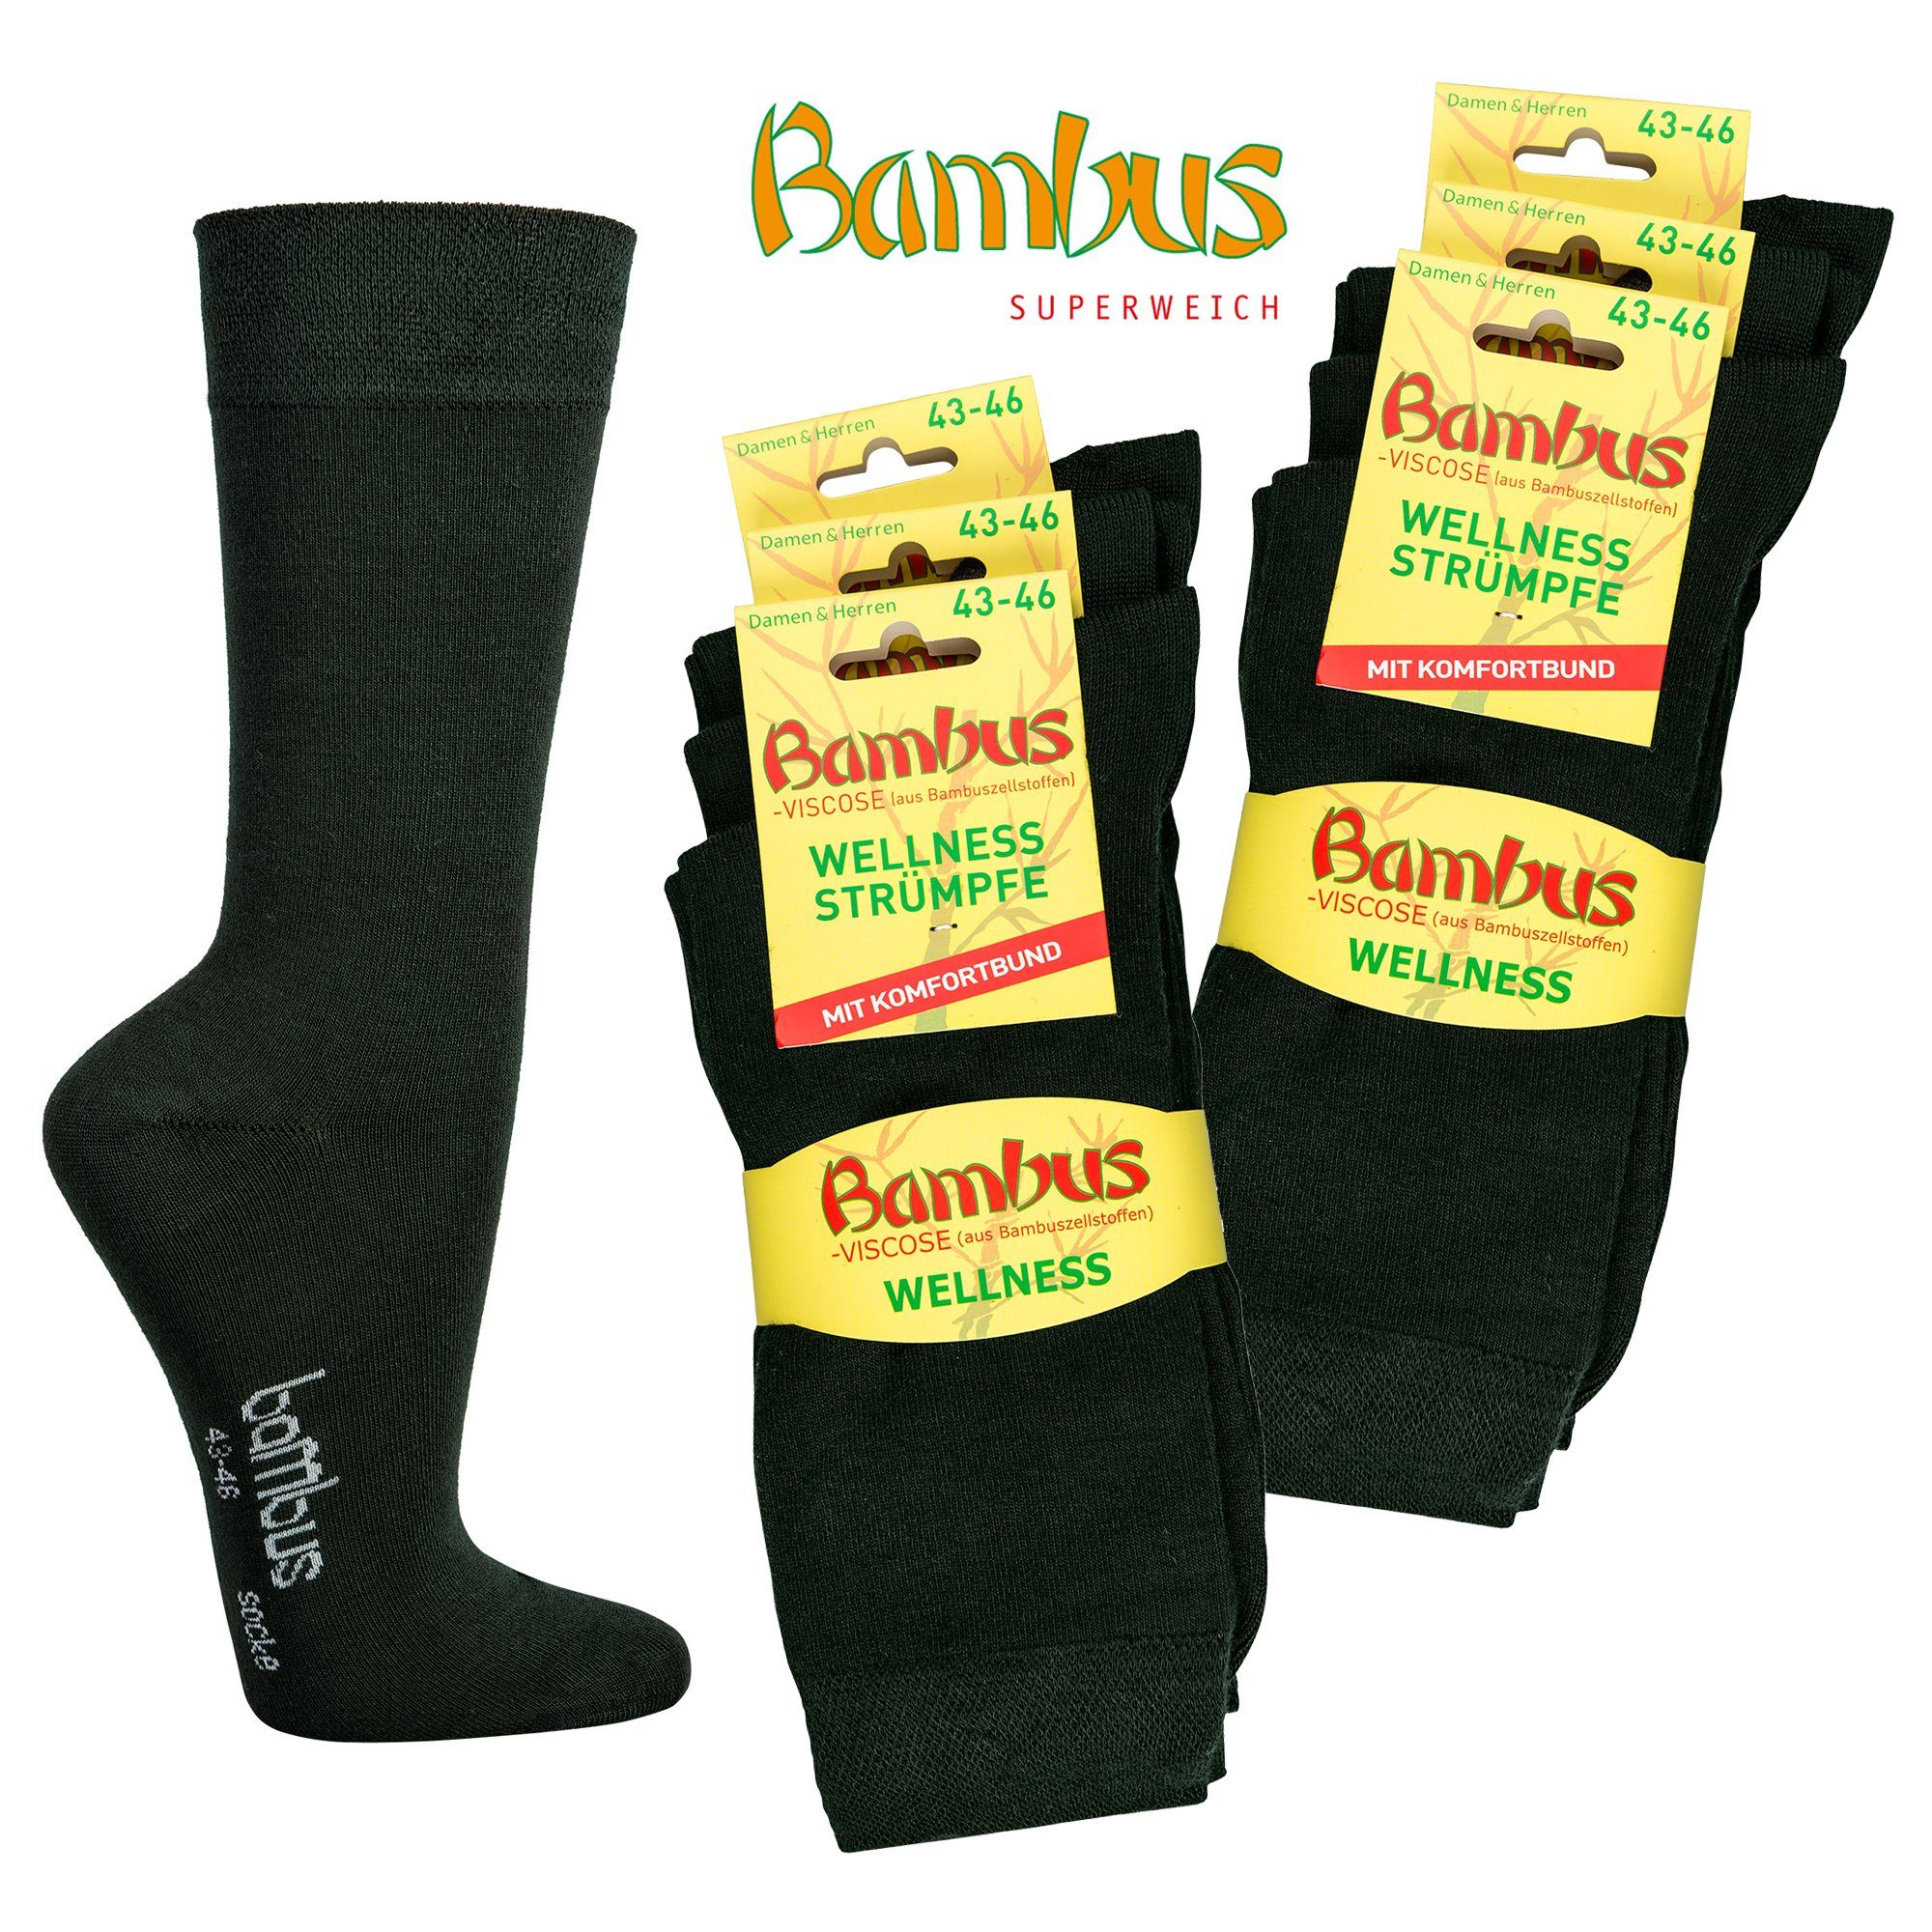 Socks 4 Fun Langsocken 2170 (Packung, 6-Paar, 6 Paar) unifarbene Wellness- Socken, Herren oder Damen Socken, mit Komfortbund